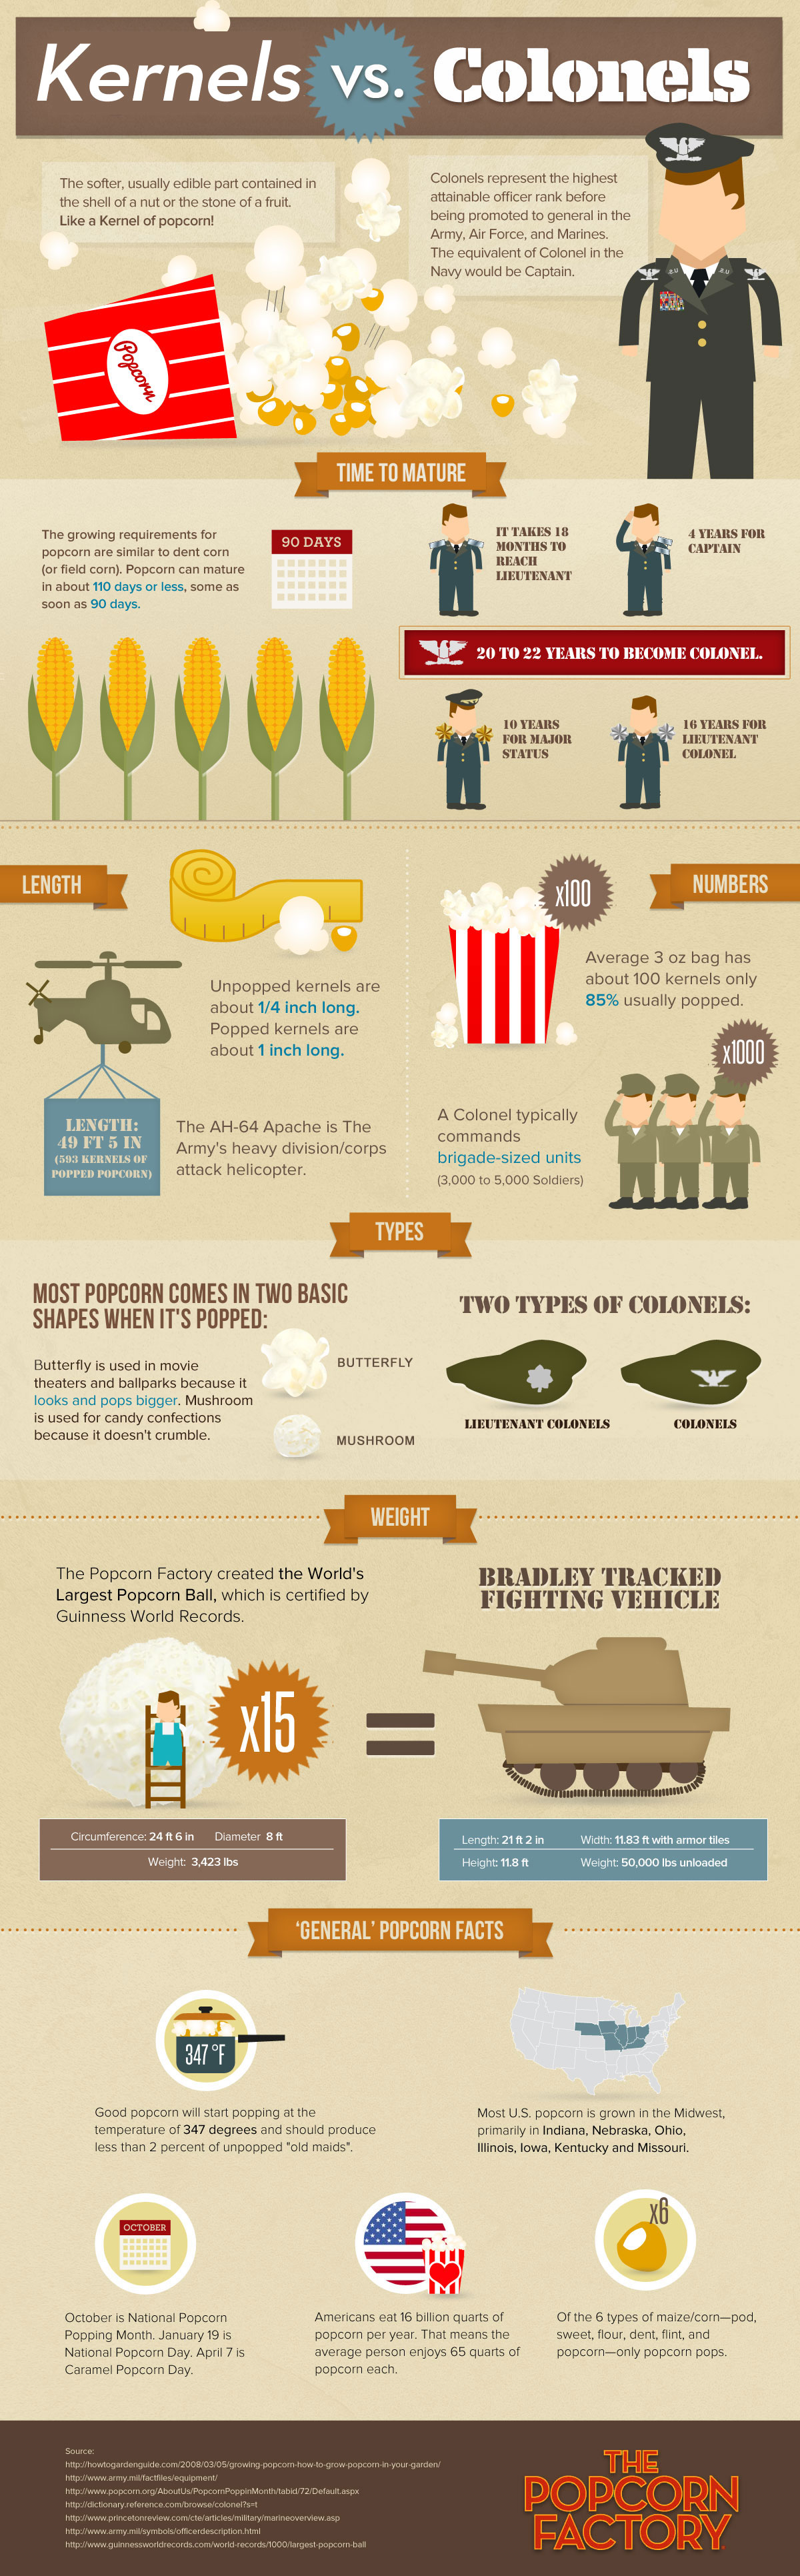 Kernels-vs.-Colonels-Infographic